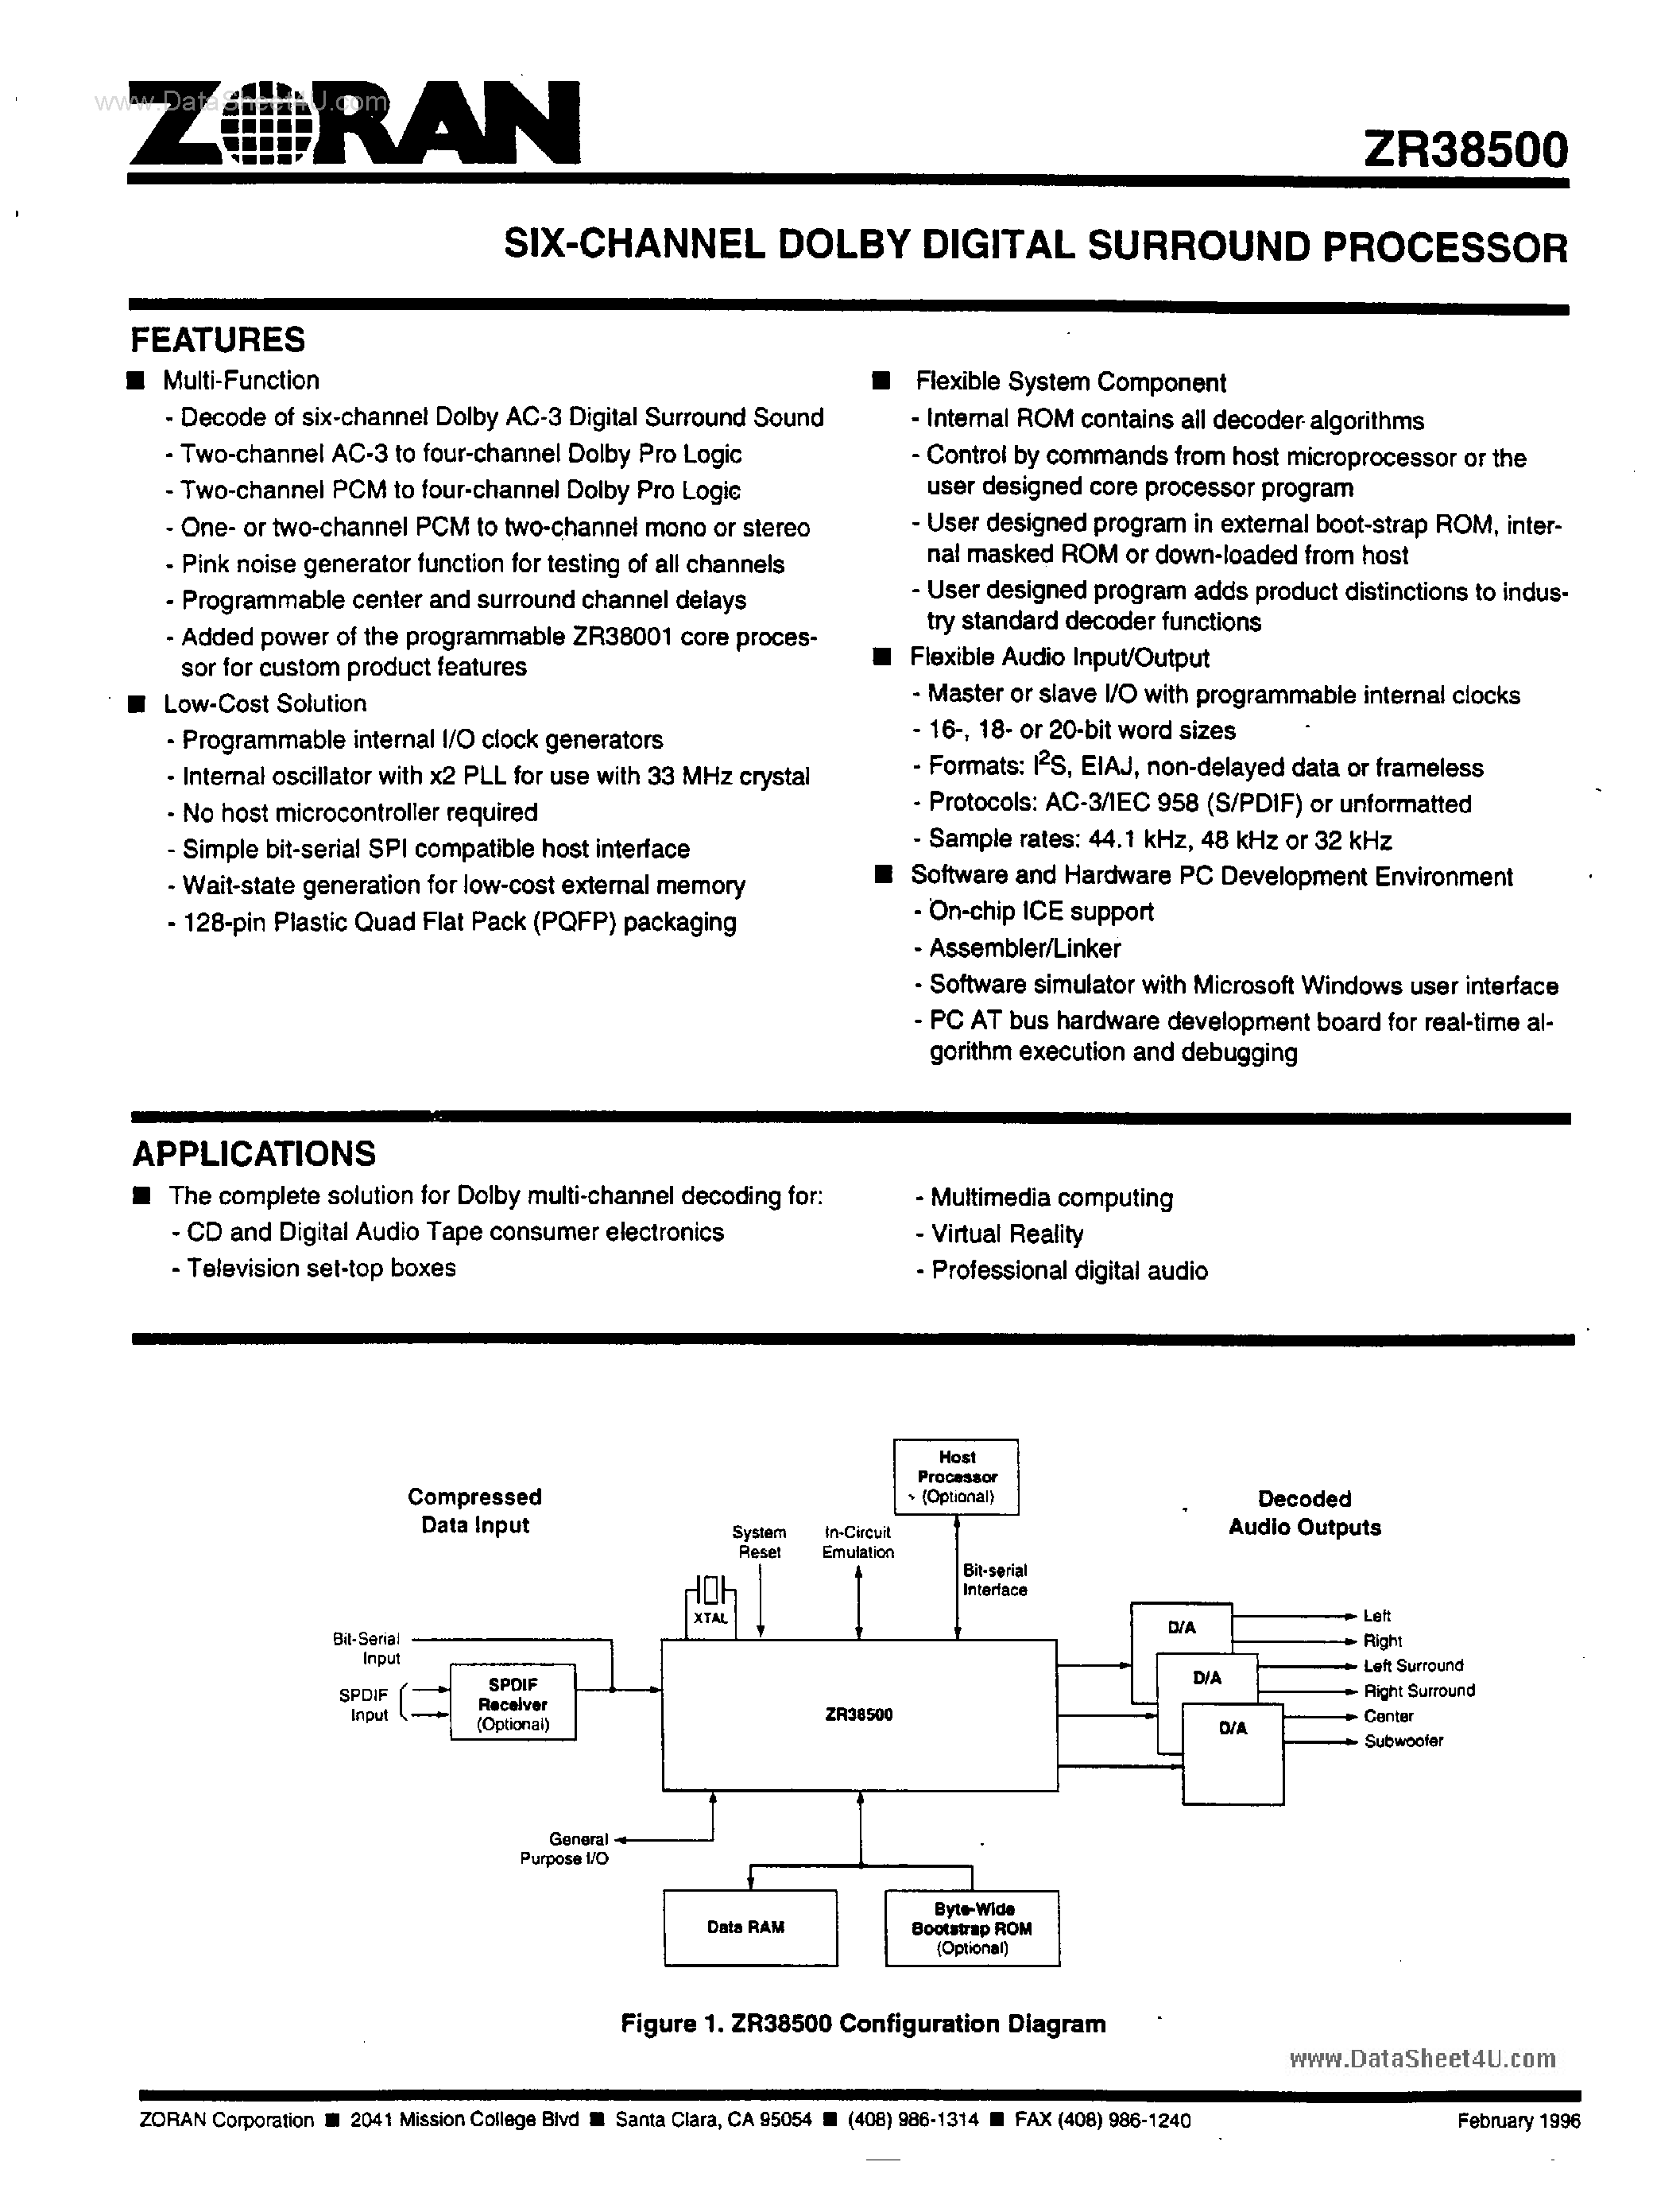 Datasheet ZR38500 - 6-Channel Dolby Digital Surround Processor page 1